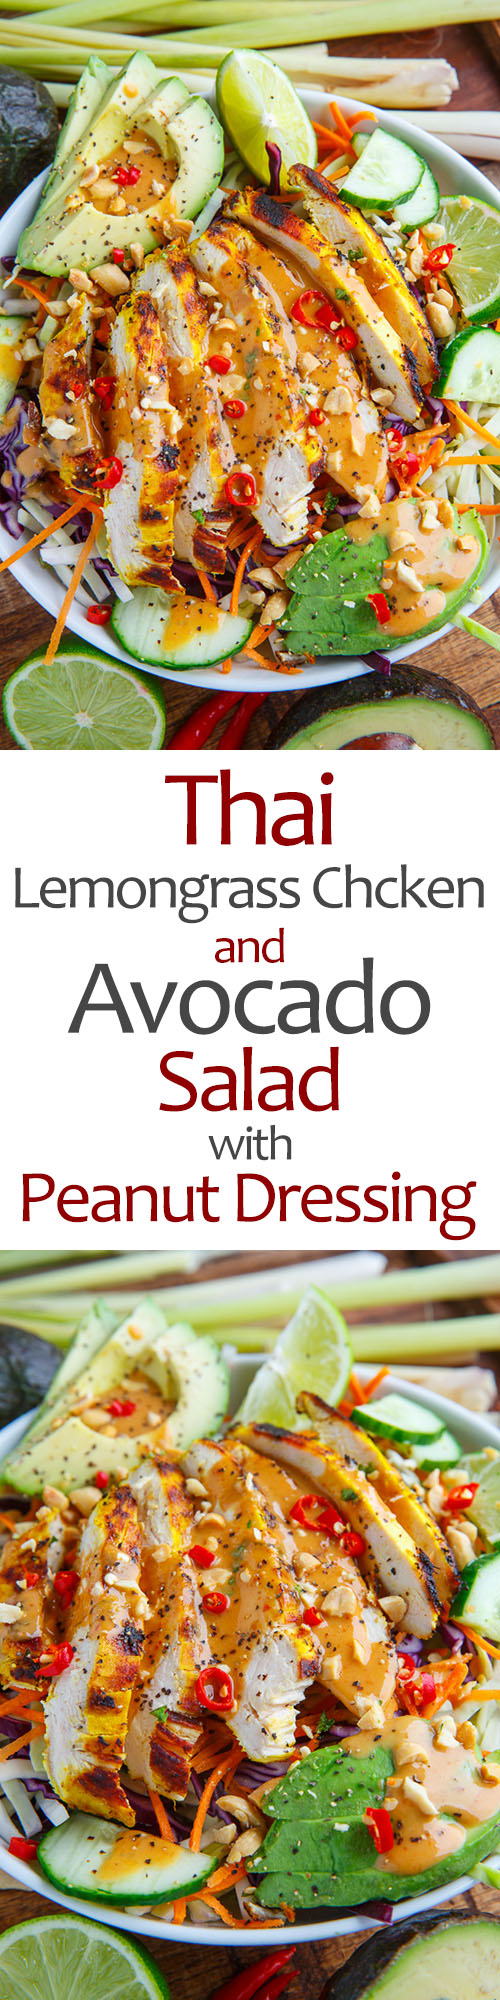 Thai Lemongrass Chicken and Avocado Salad with Spicy Peanut Dressing